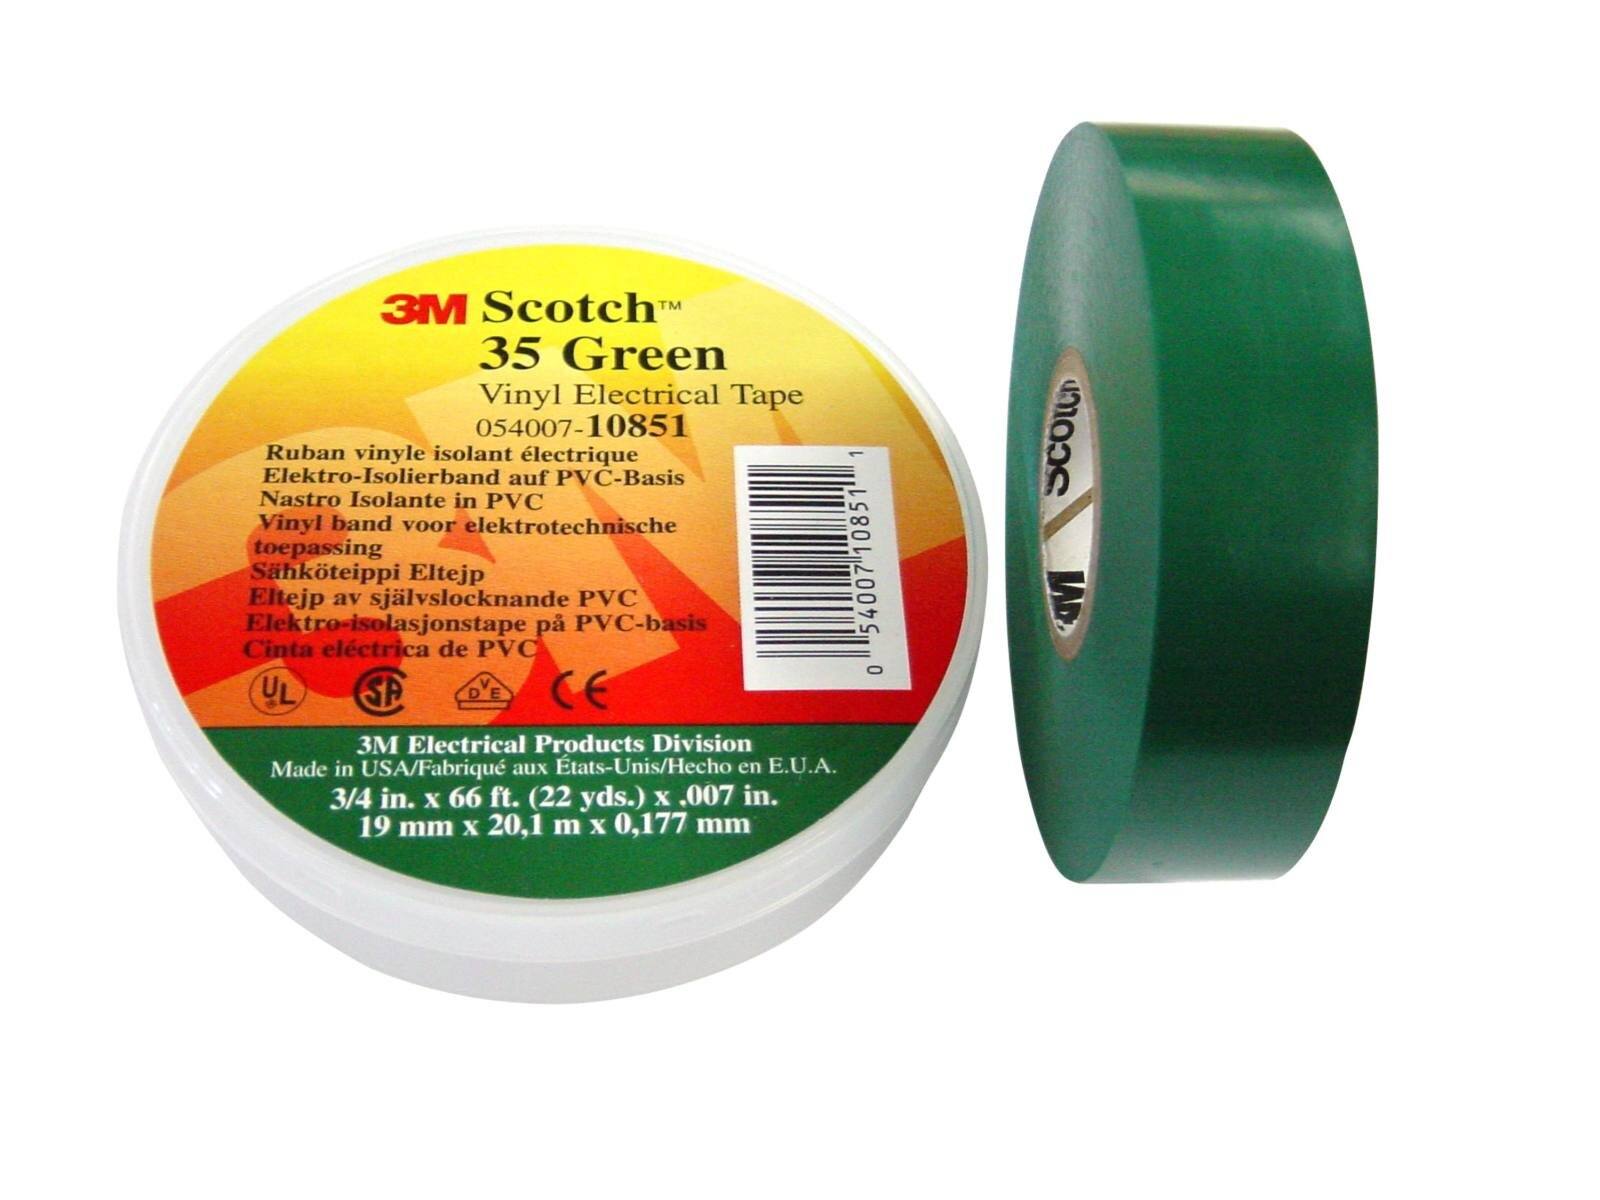  3M Scotch 35 vinyylinen sähköeristysteippi, vihreä, 19 mm x 20 m, 0,18 mm